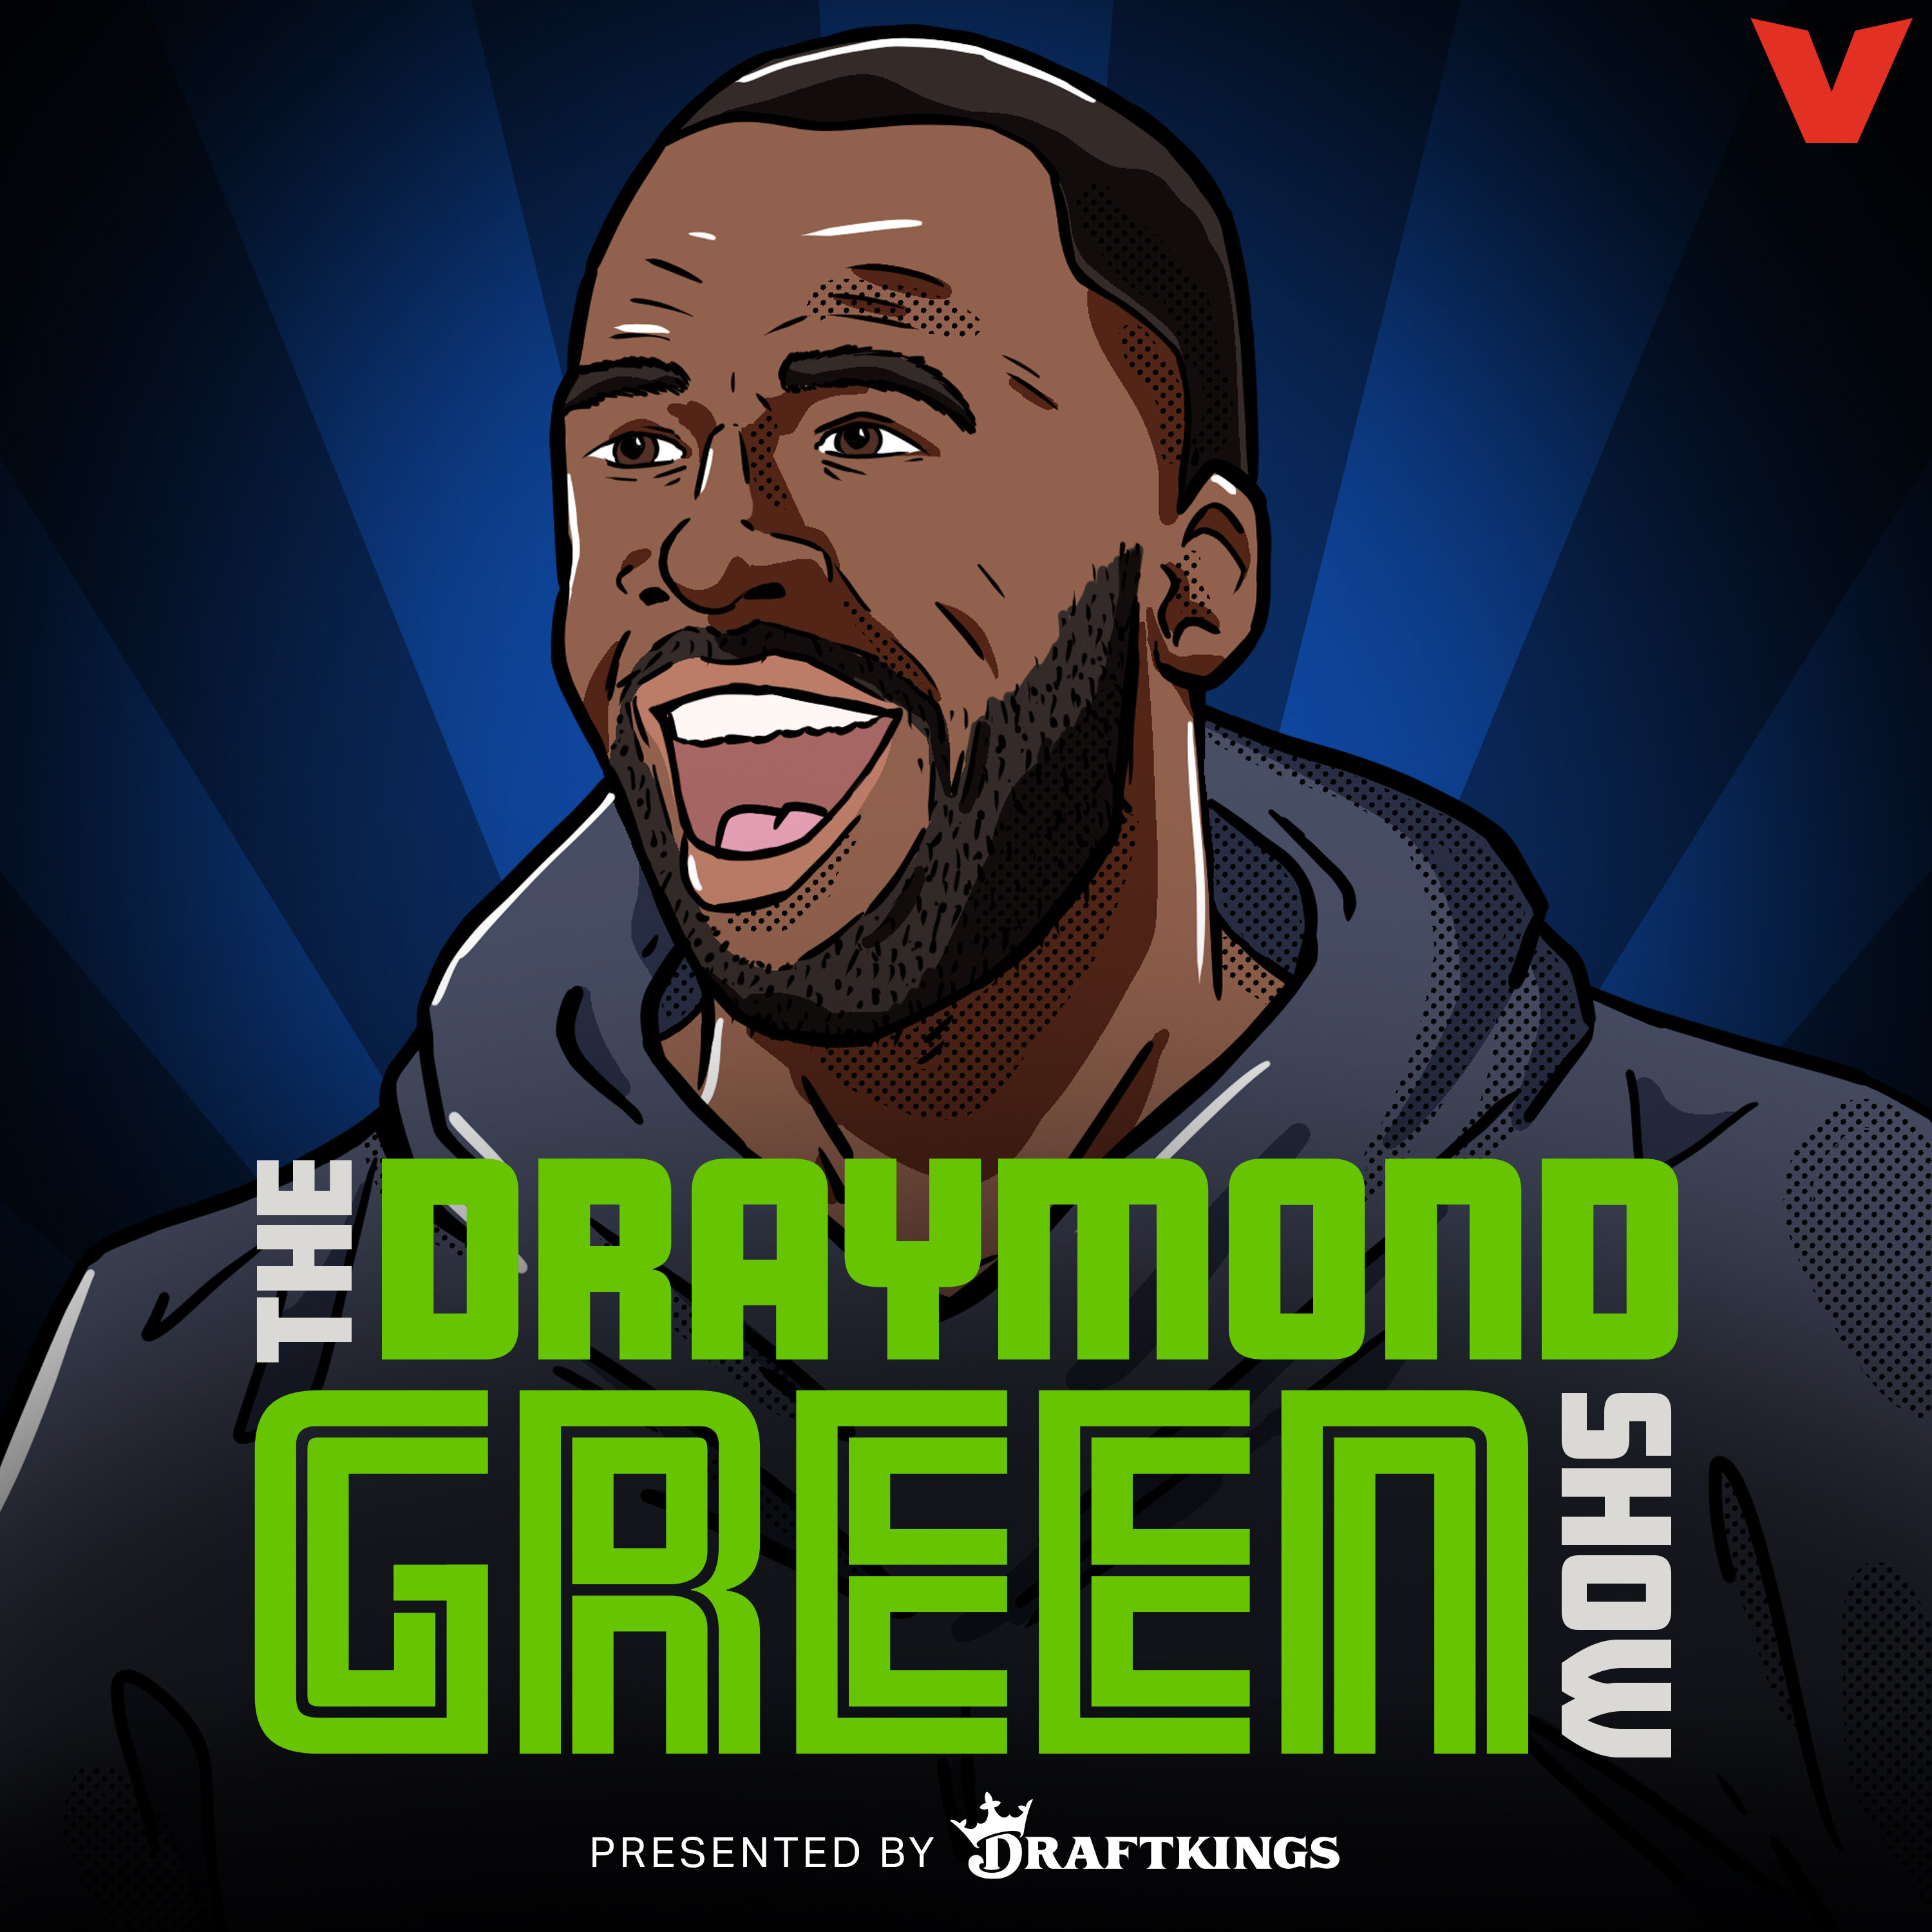 Draymond Green Show - Warriors Season Over, What's Next?